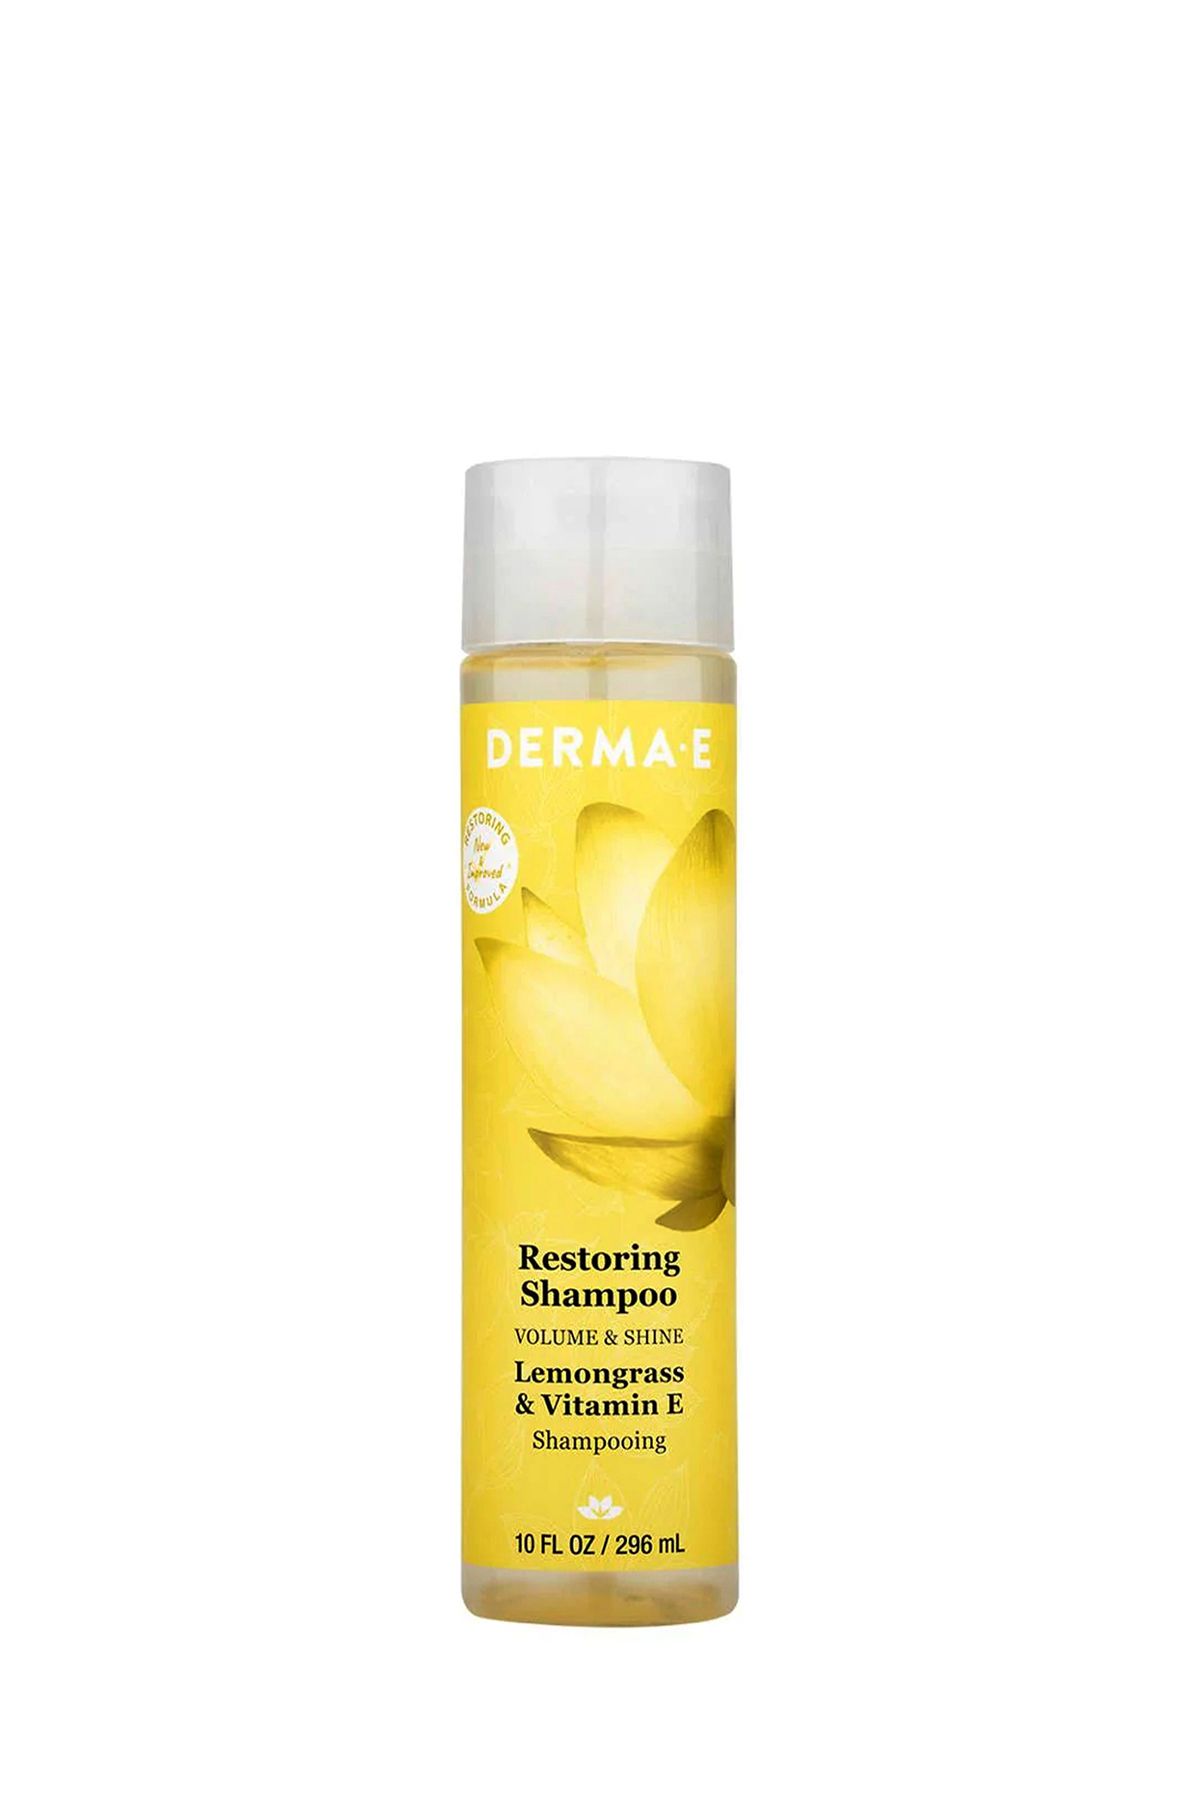 DERMA E Restoring Shampoo 296 ml